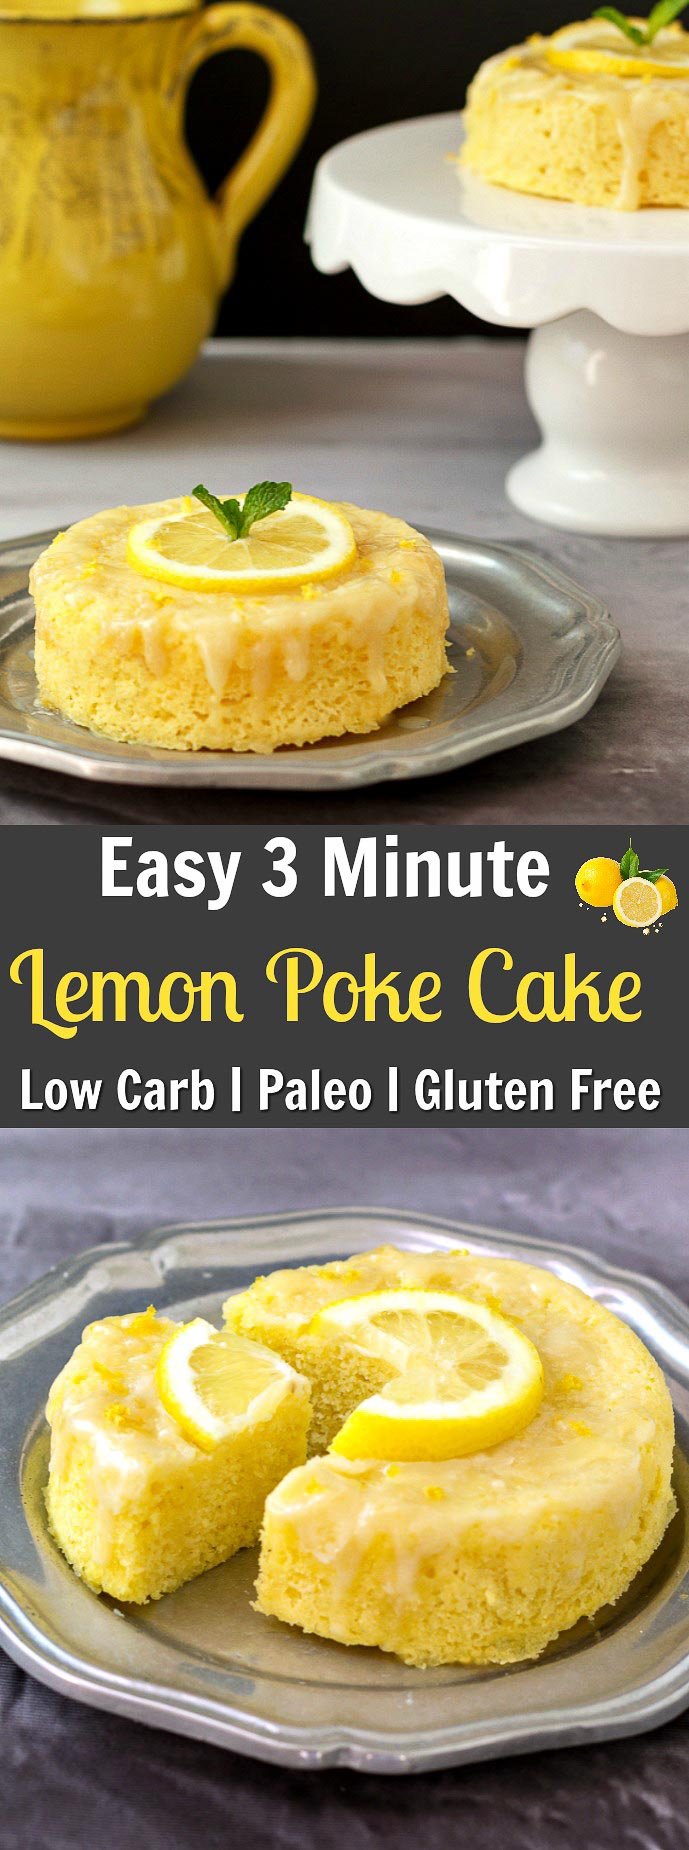 3 Minute Lemon Poke Cake Low Carb & Paleo- A fast and simple tasty treat!